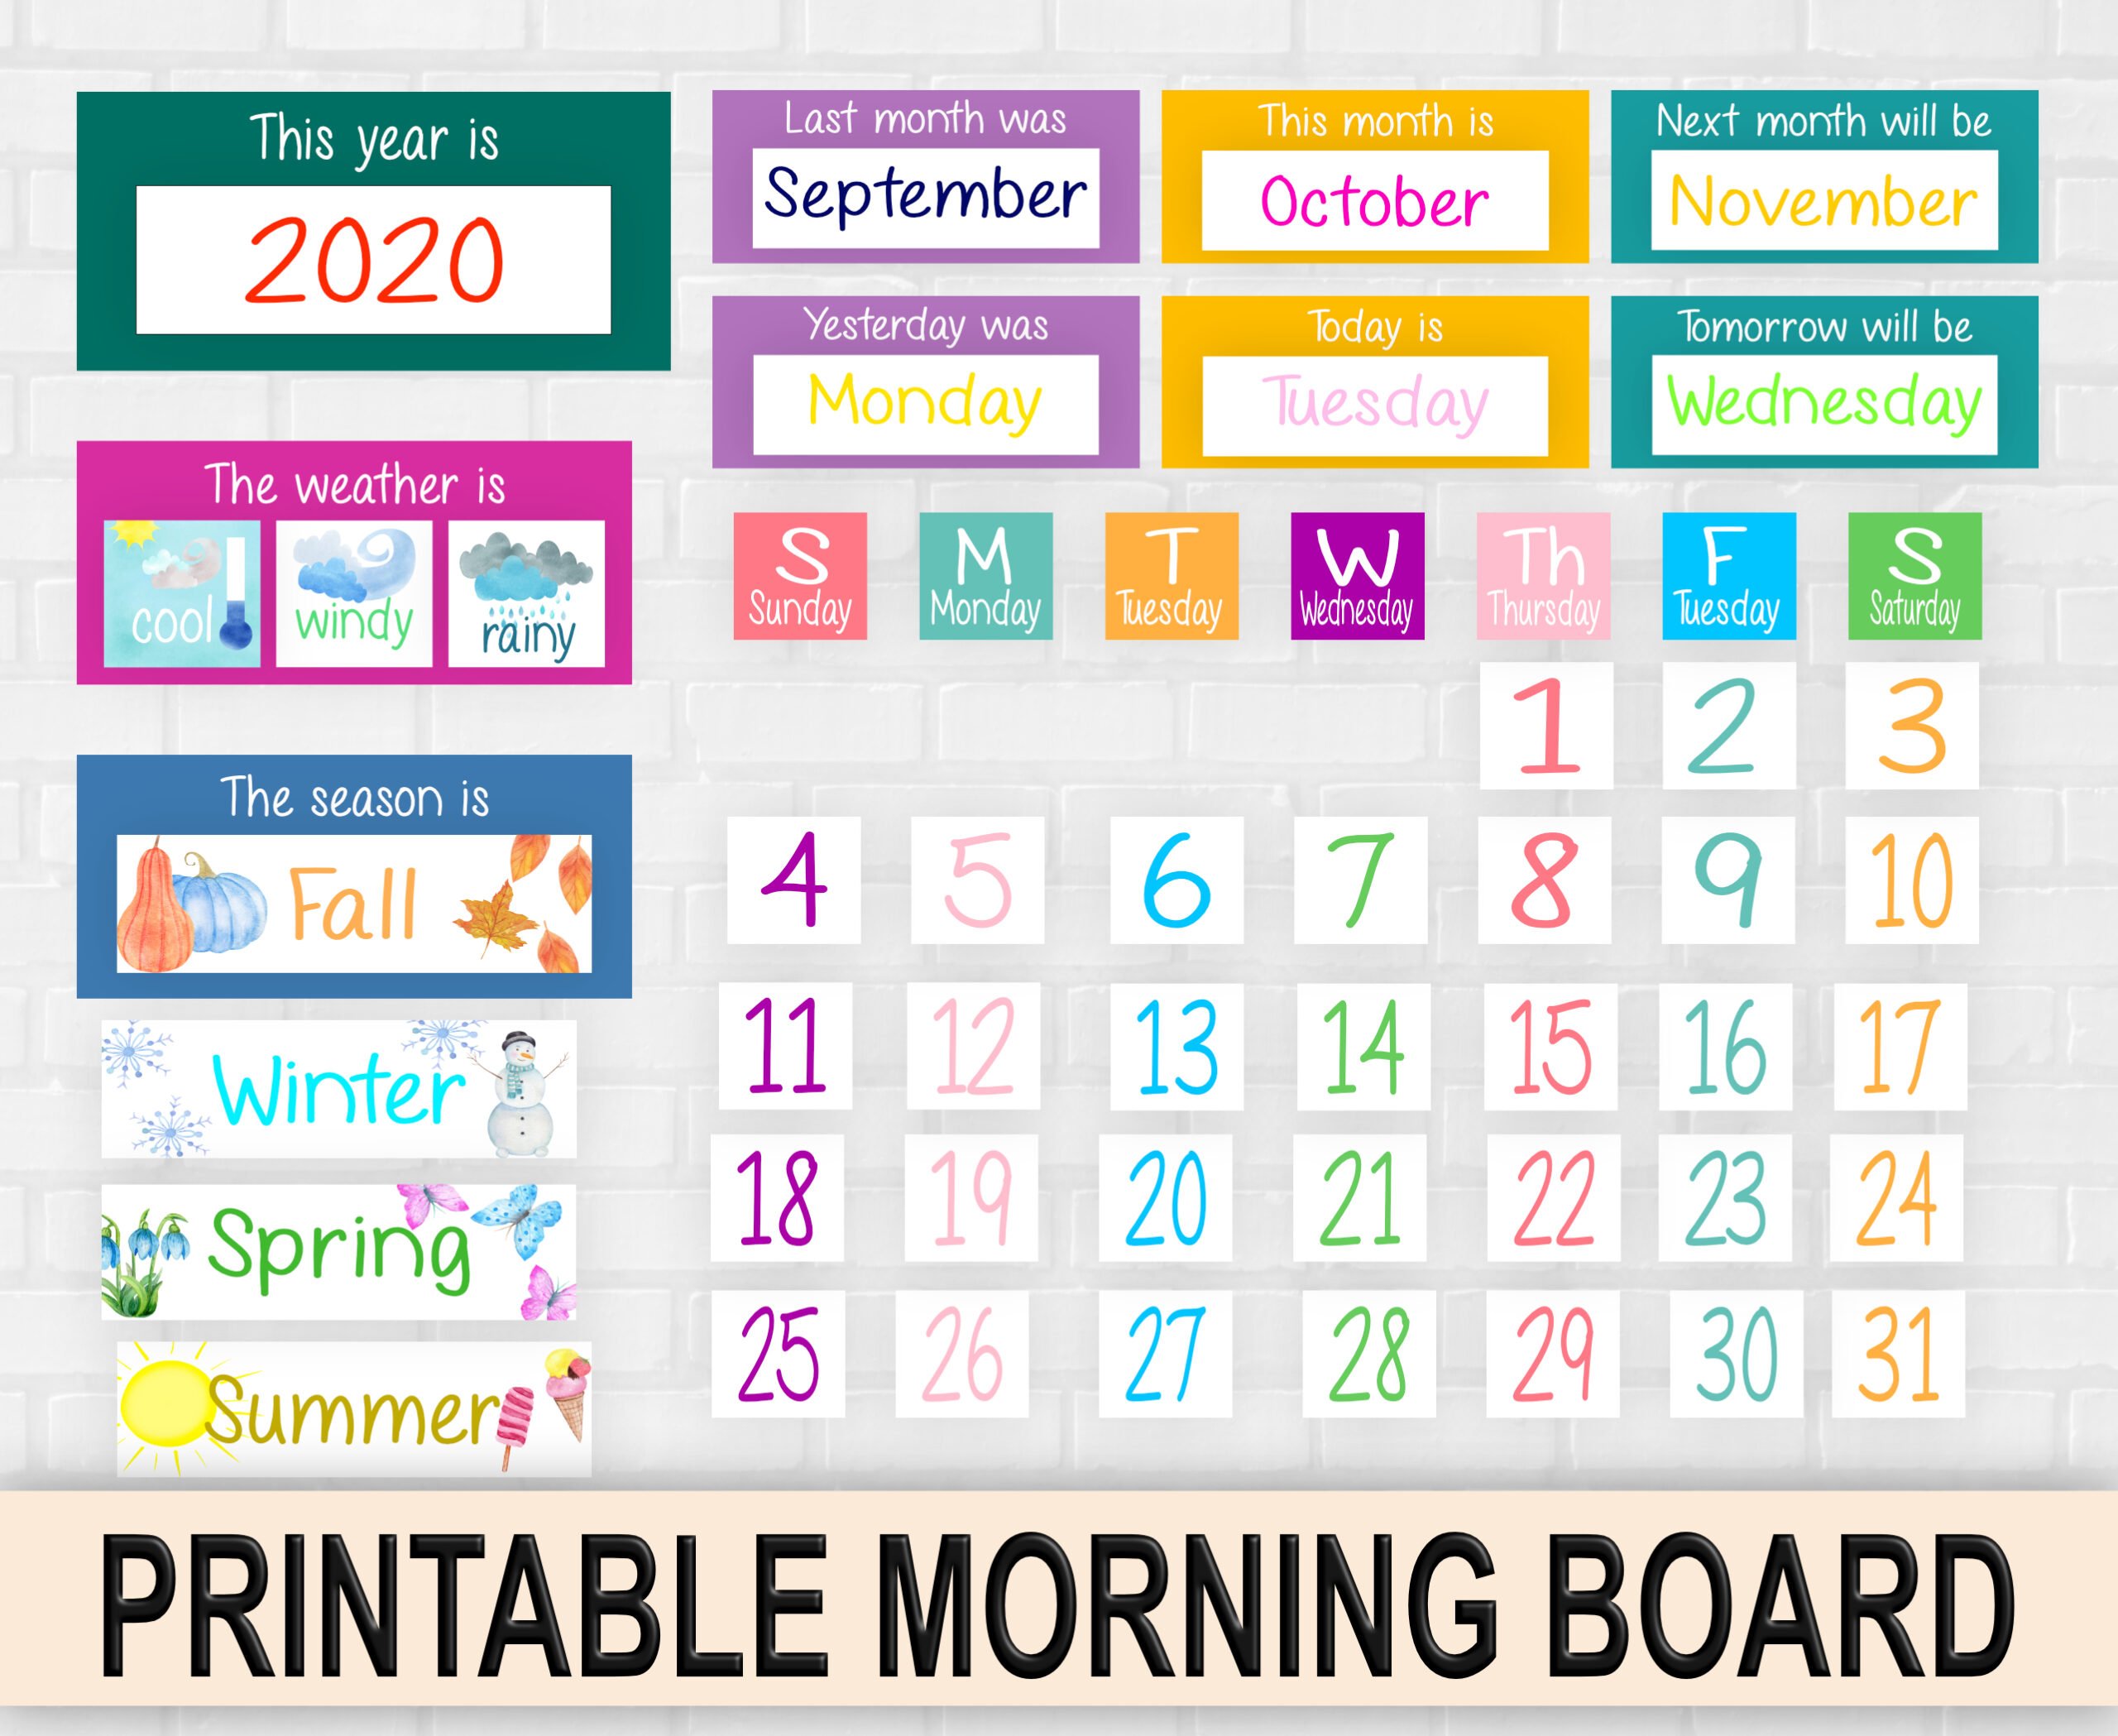 KIDS | SCHOOL GAMES Kids Morning Board Activity Game Home school Weather Chart Calendar